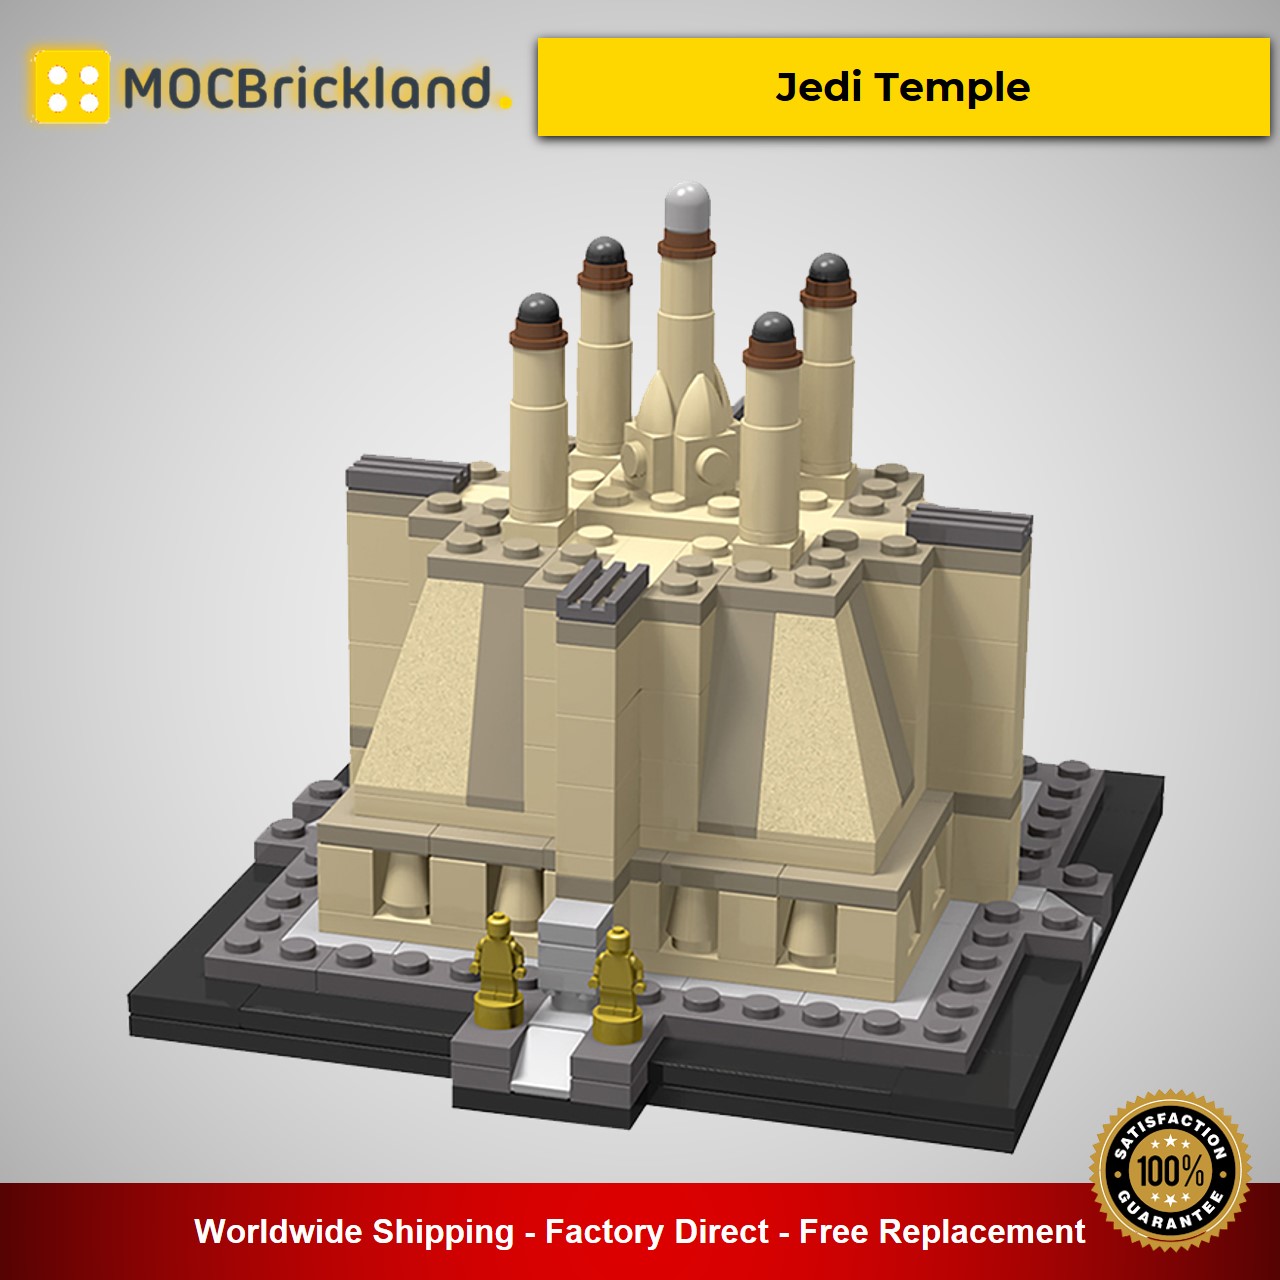 MOCBRICKLAND MOC-16471 Jedi Temple